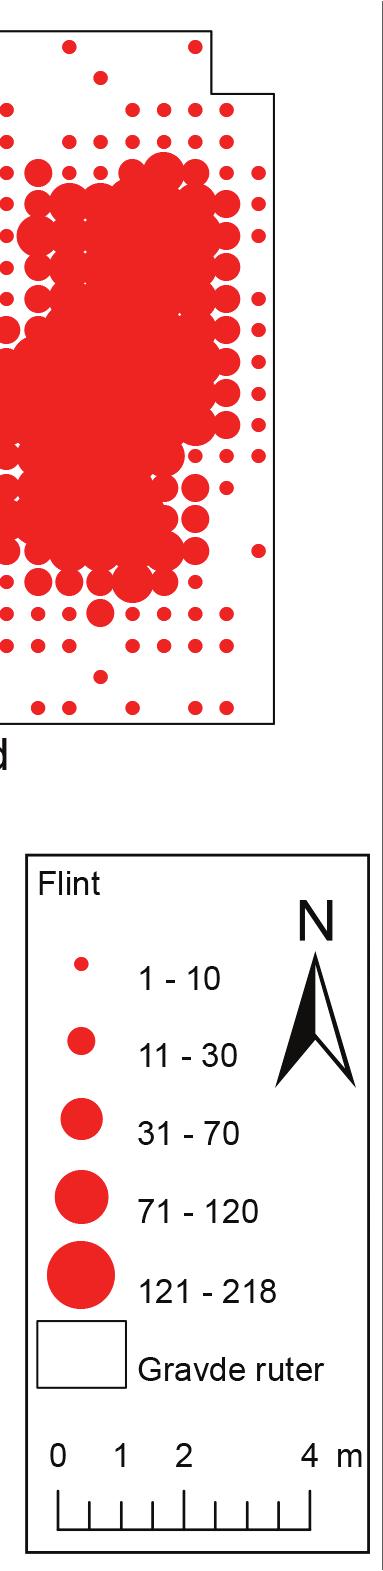 172 vestfoldbaneprosjektet. bind 1 Figur 8.10. Funnspredning for flint, bergart og kvarts. Figure 8.10. Find distribution, flint (red circles), volcanic rock (blue circles) and quartz (orange triangles).